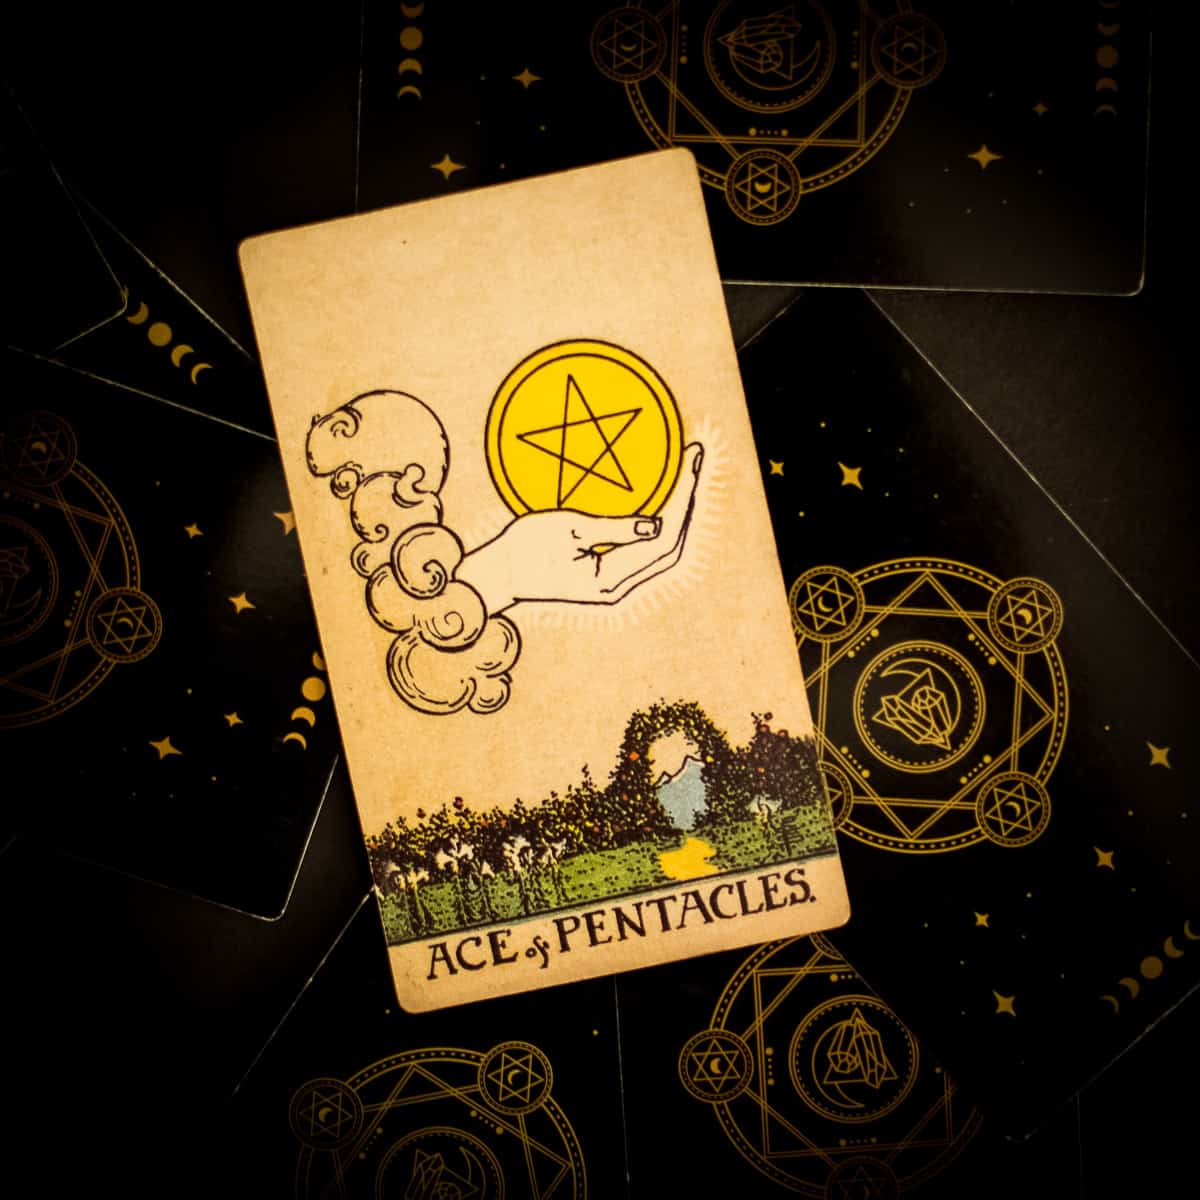 The Ace of Pentacles card from the original Ryder Waite tarot deck.